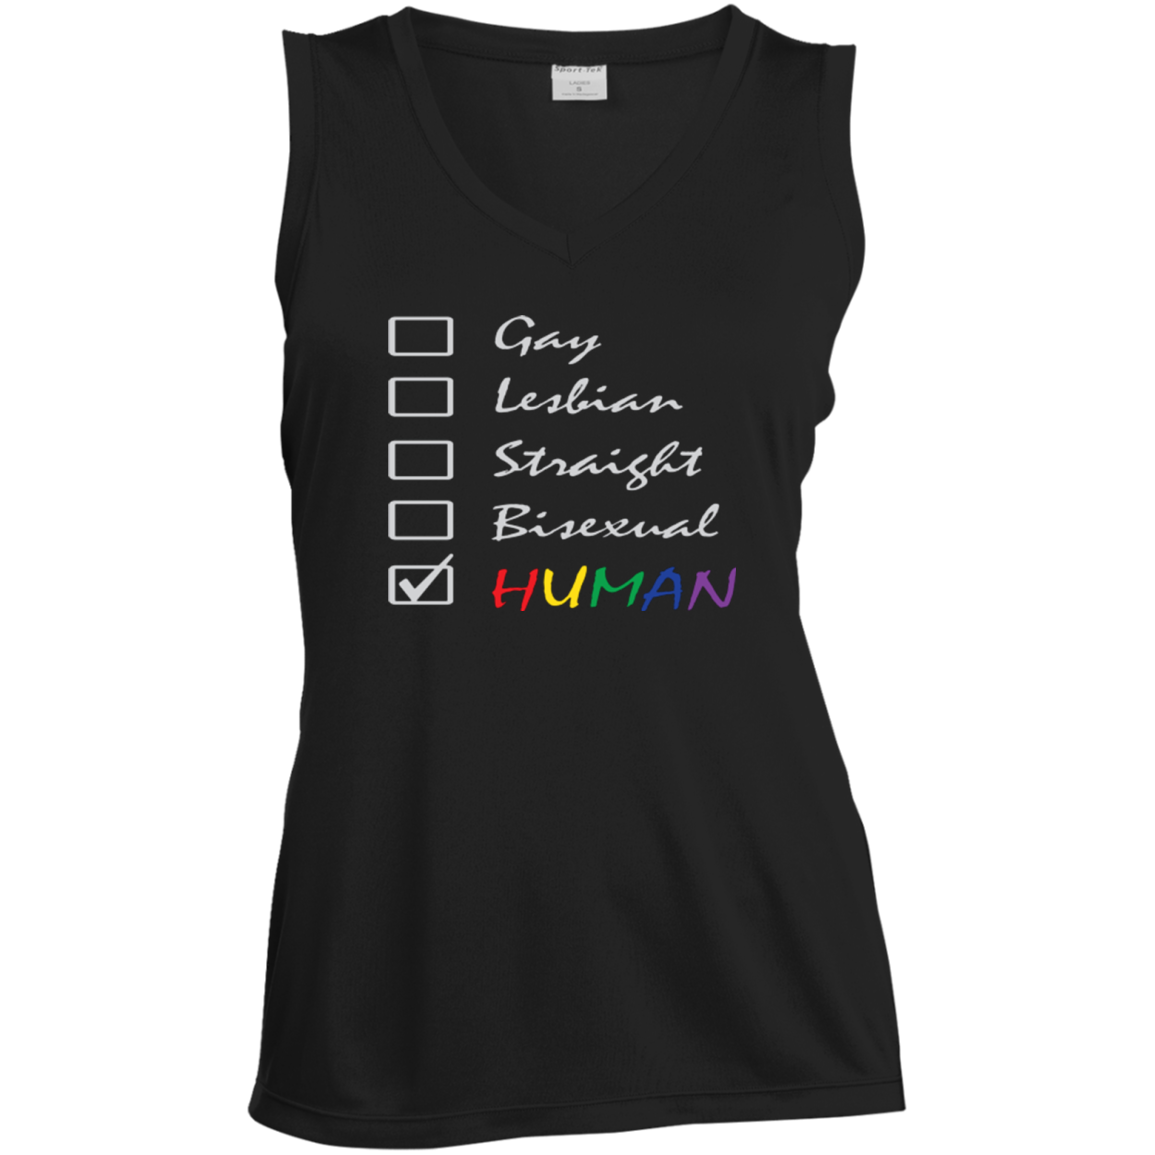 Human Check Box LGBT Pride black sleeveless T Shirt for Women Human Equality LGBT Pride black sleeveless Tshirt for Women